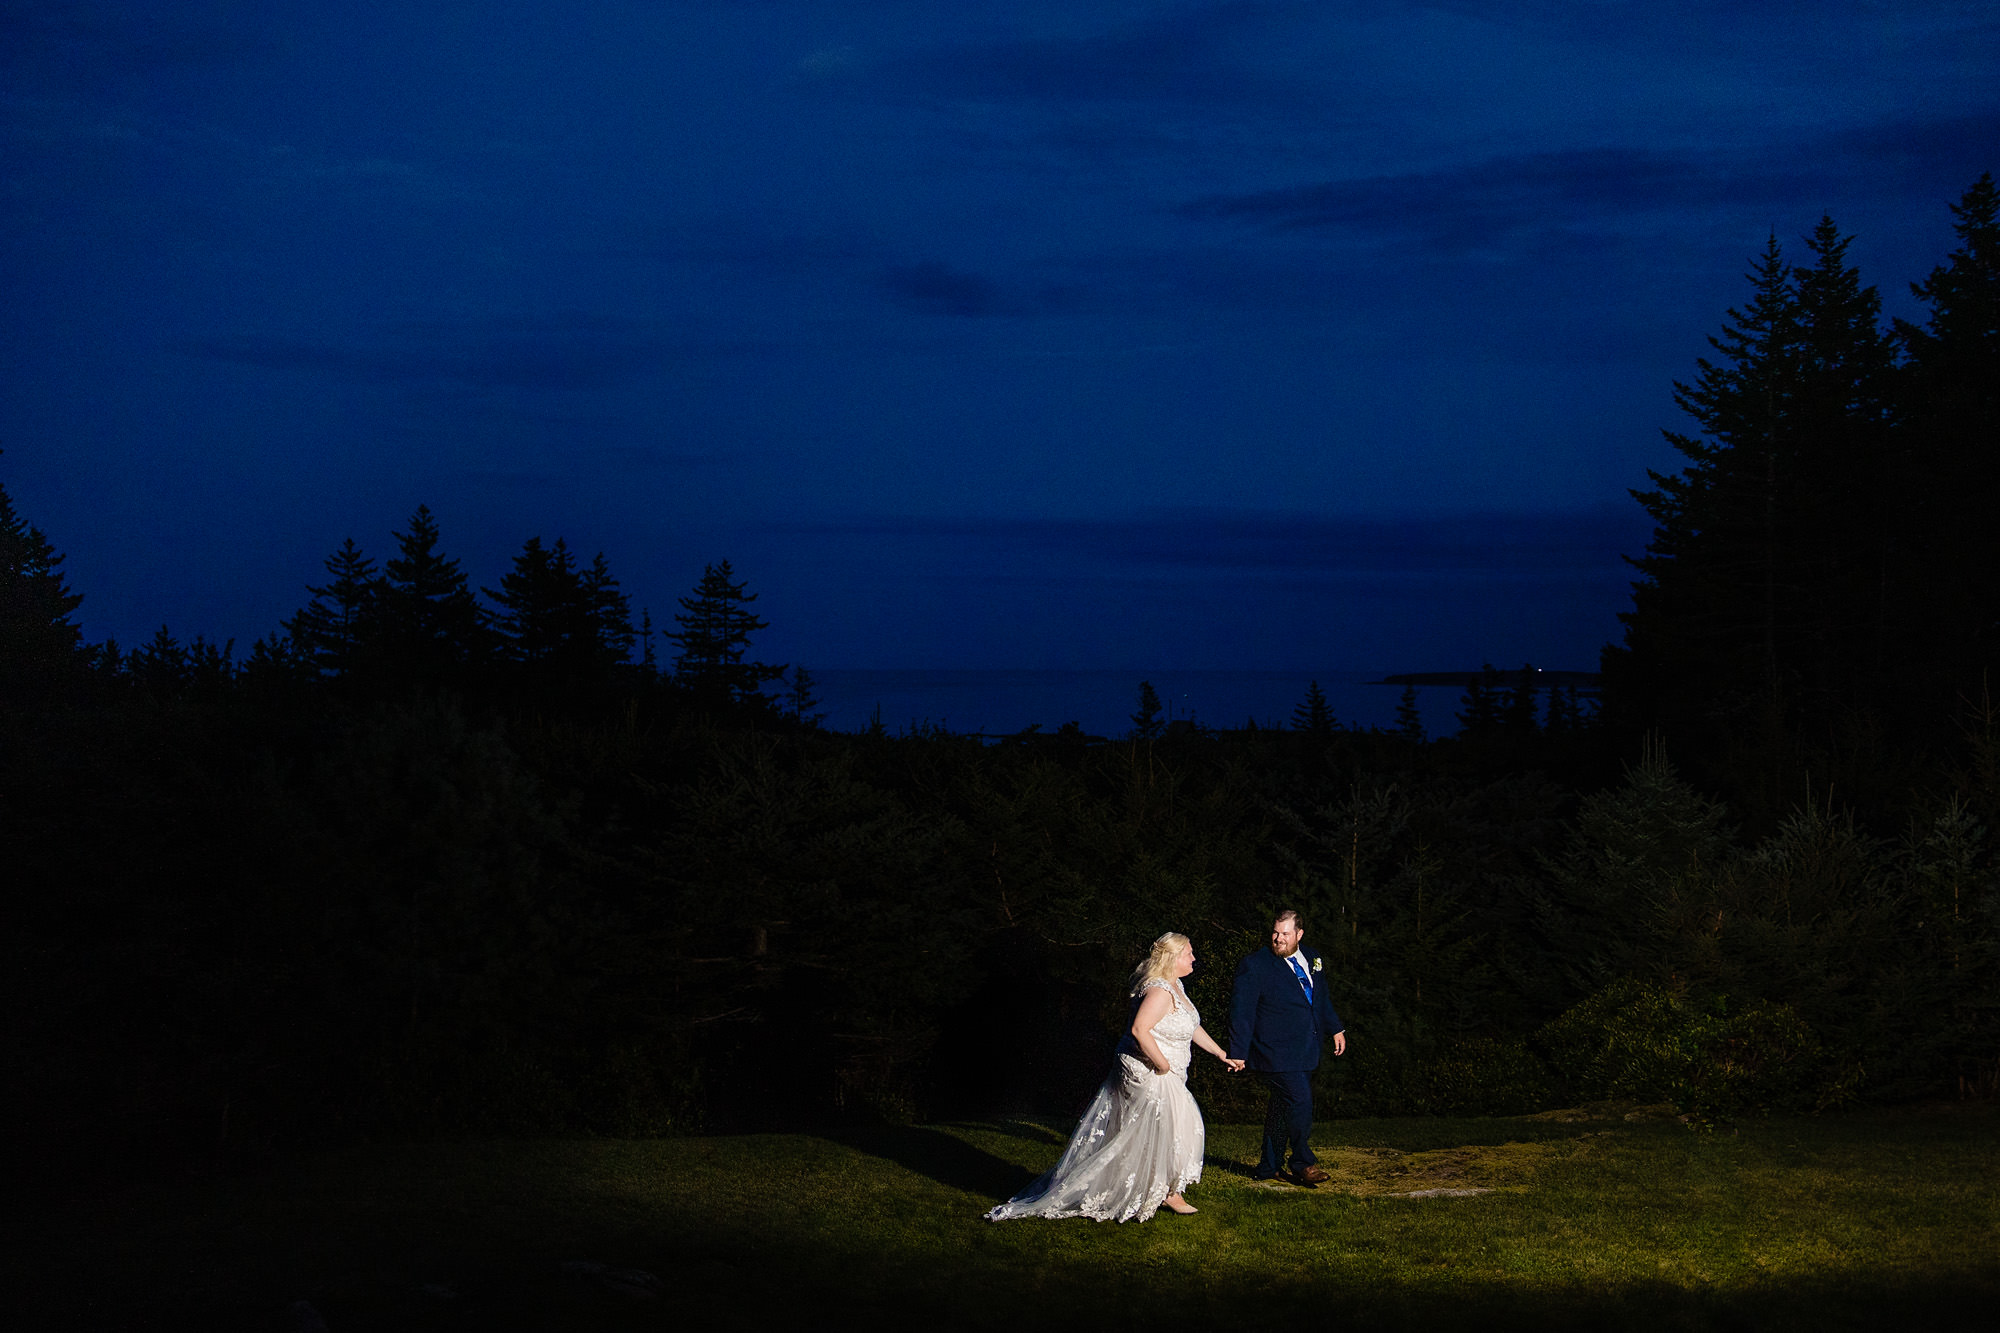 An intimate wedding reception in Northeast Harbor, Maine